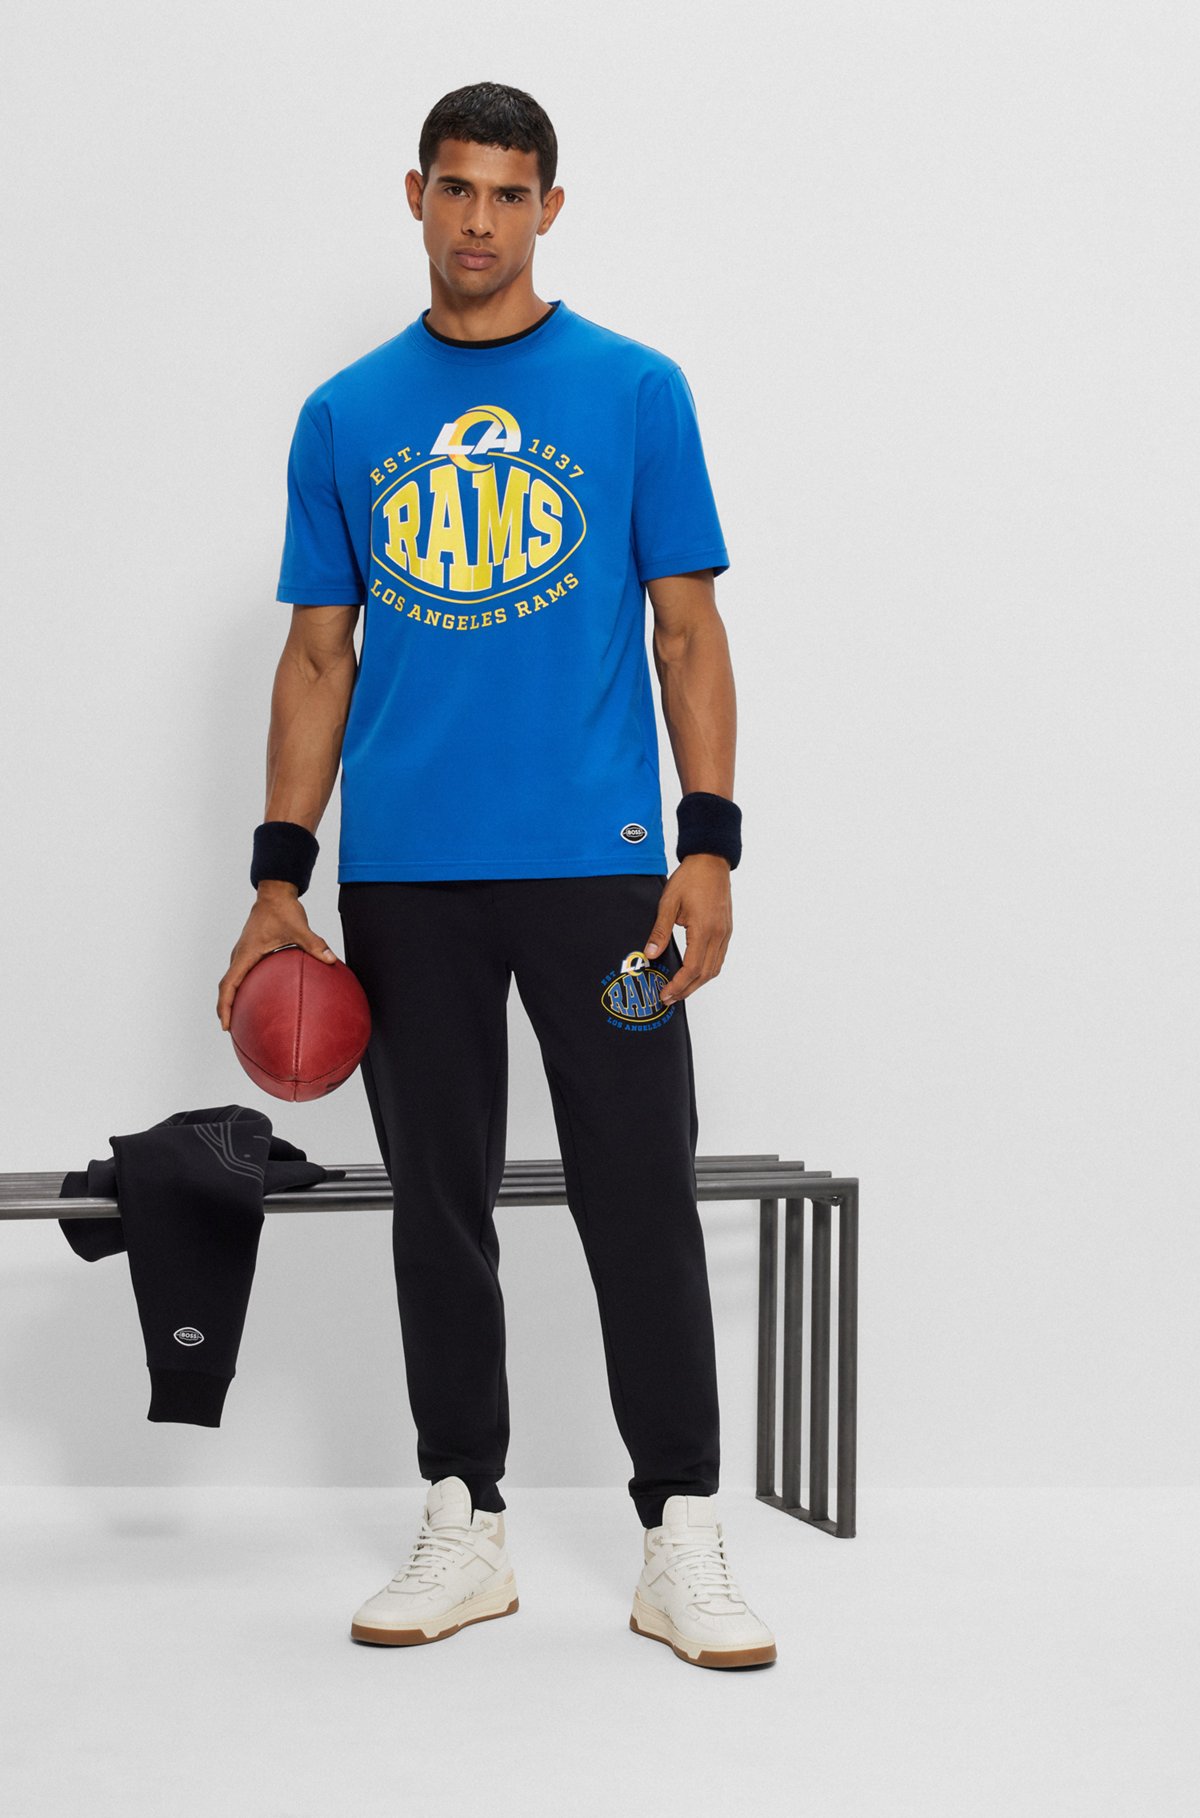  T-shirt en coton stretch BOSS x NFL avec logo du partenariat, Rams